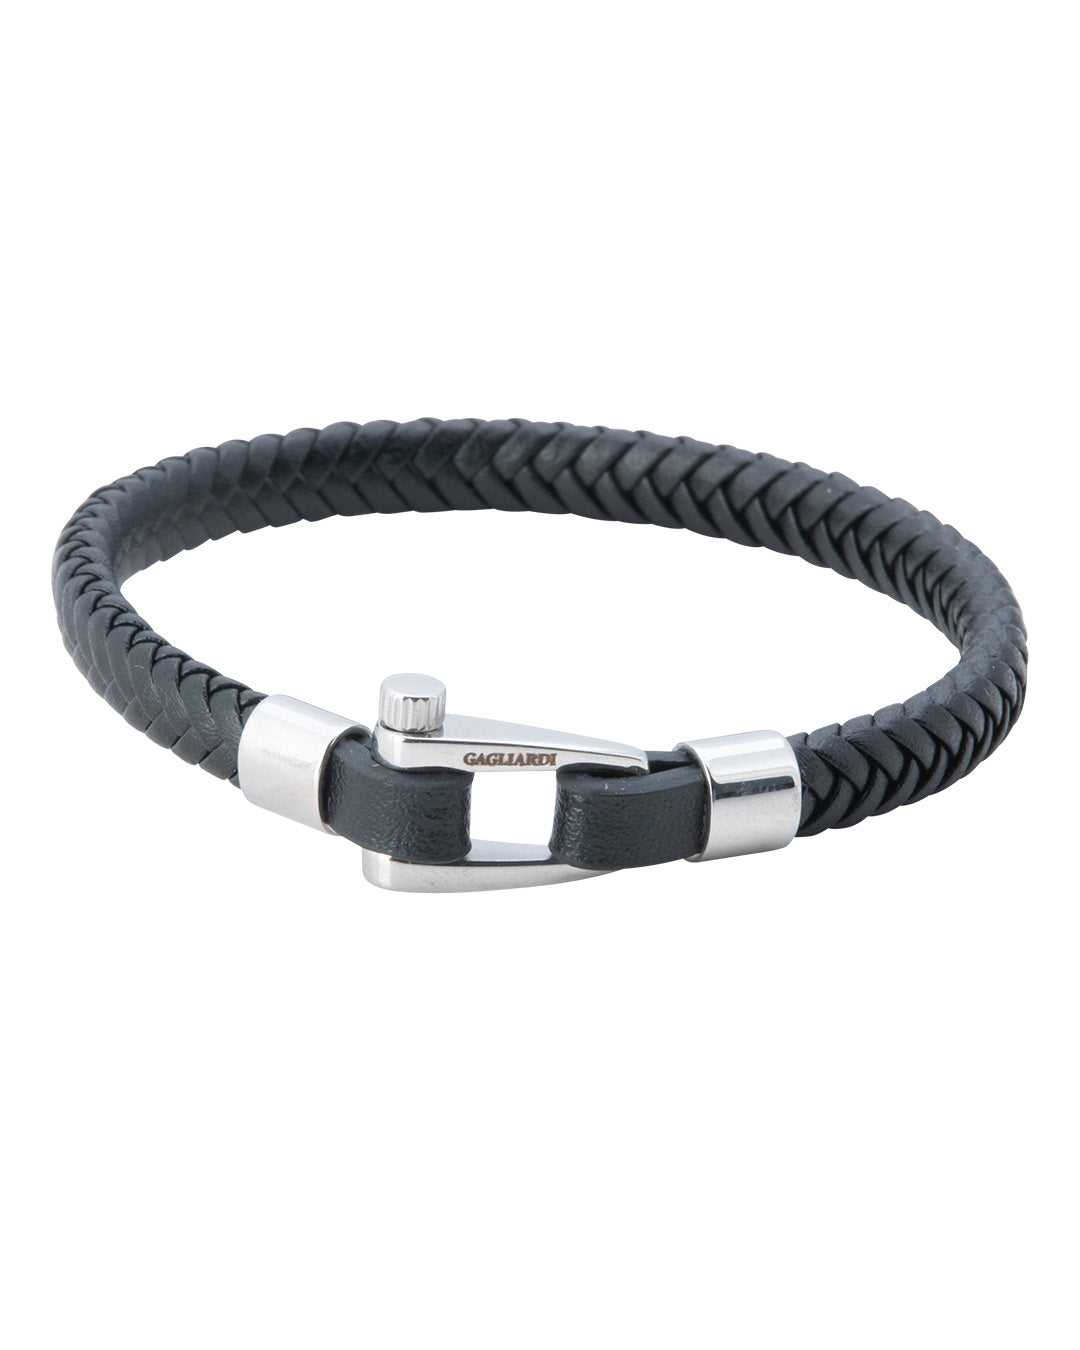 Black Braided Leather Bracelet With Polished Steel Screw Clasp